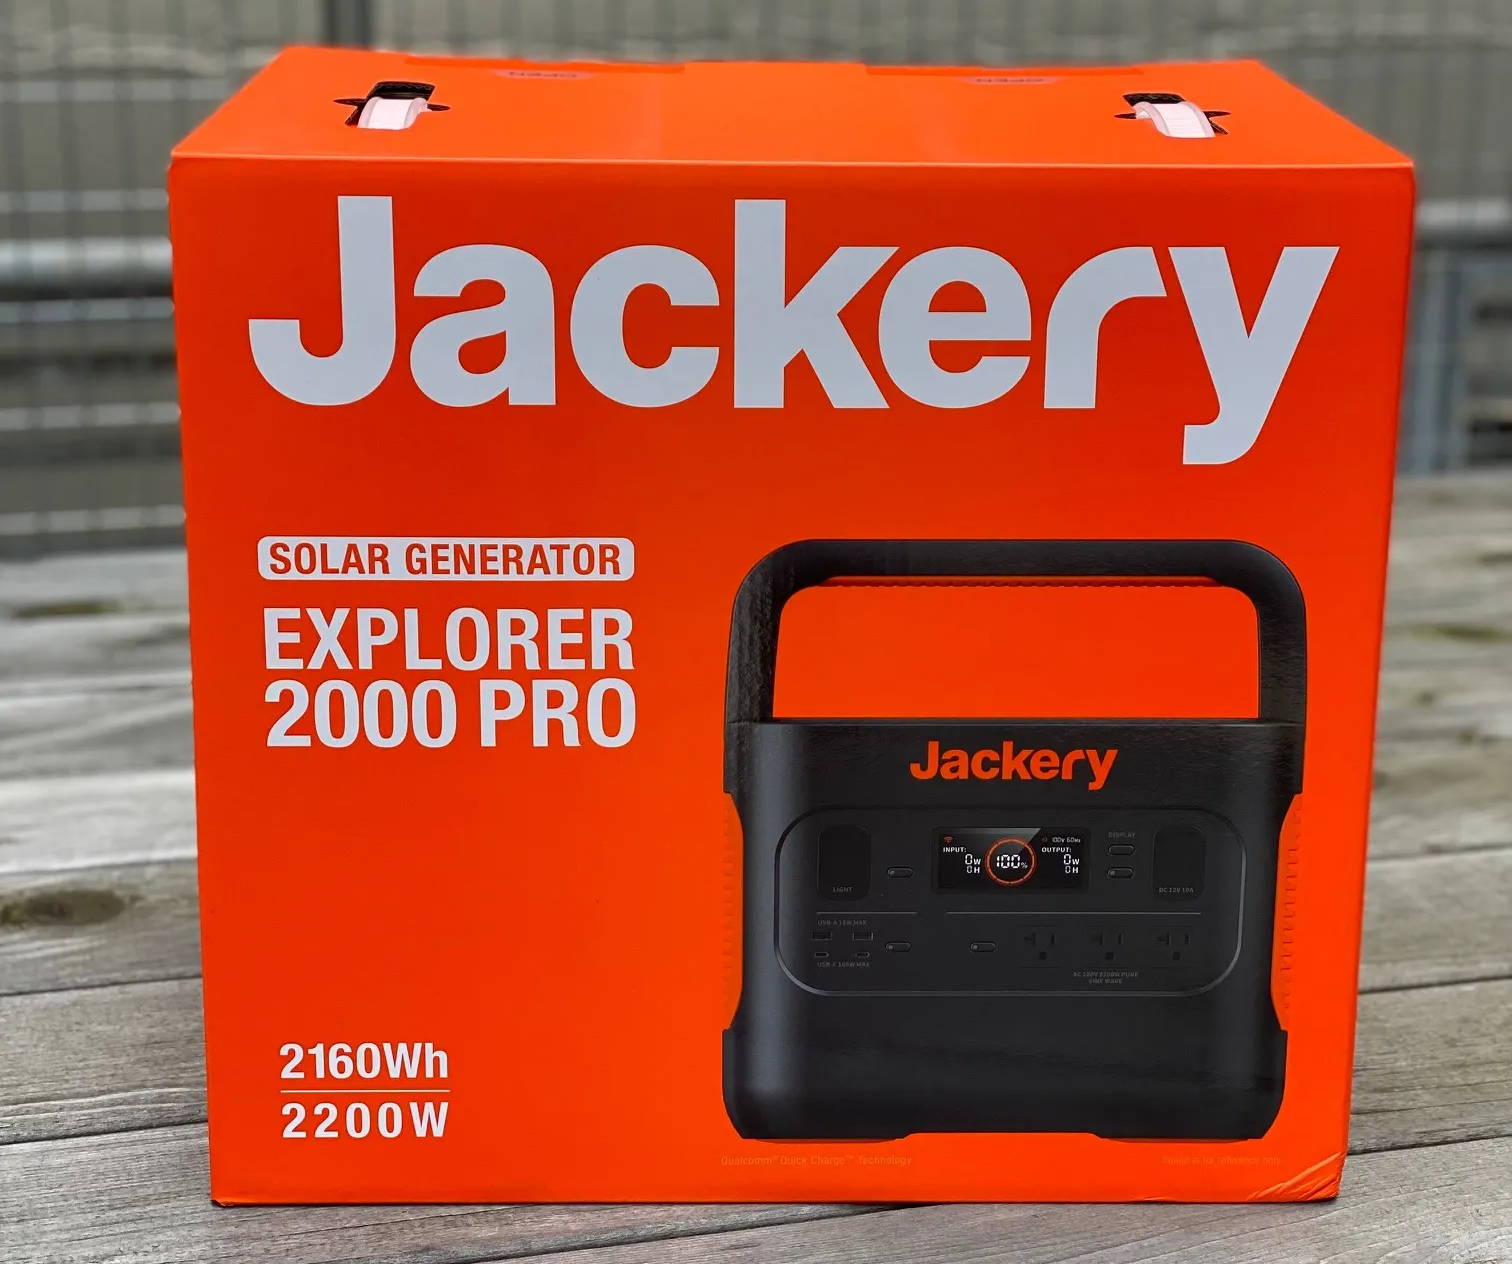 Jackery史上最大容量となるJackery ポータブル電源 2000 Pro。